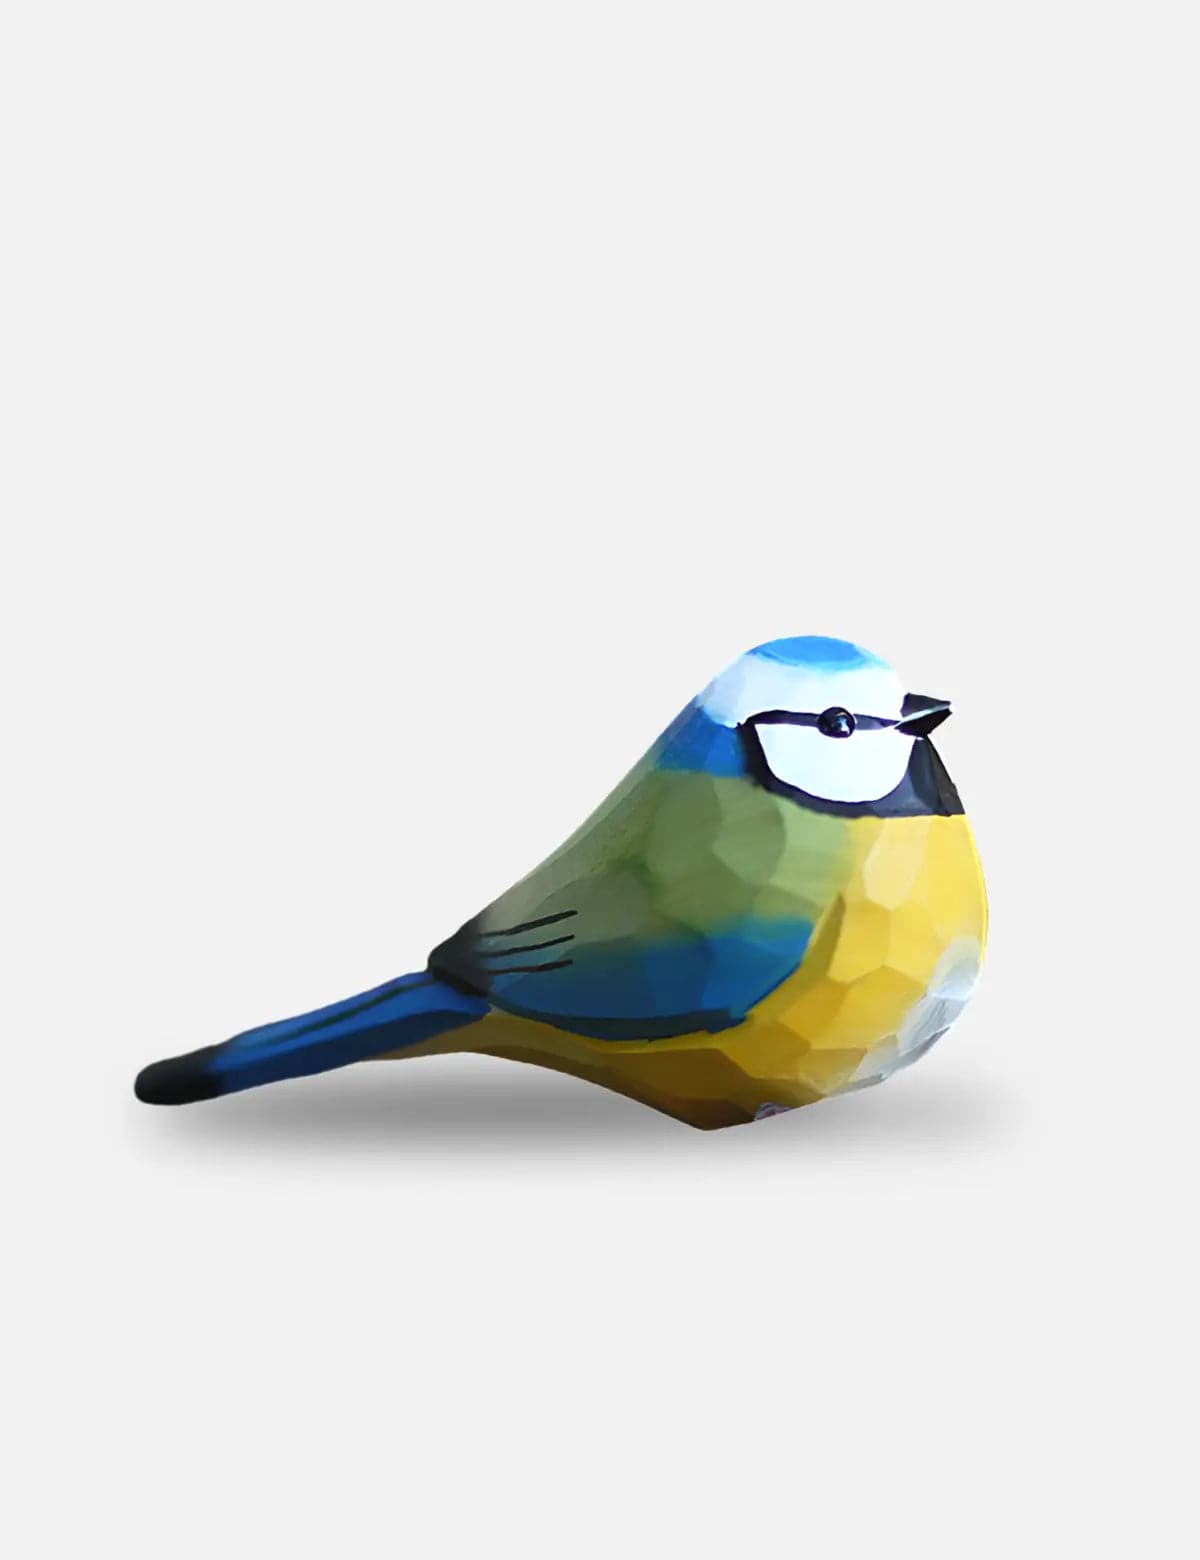 Sculpted-Blue-Tit-Bird-Whimsical-Decor-01